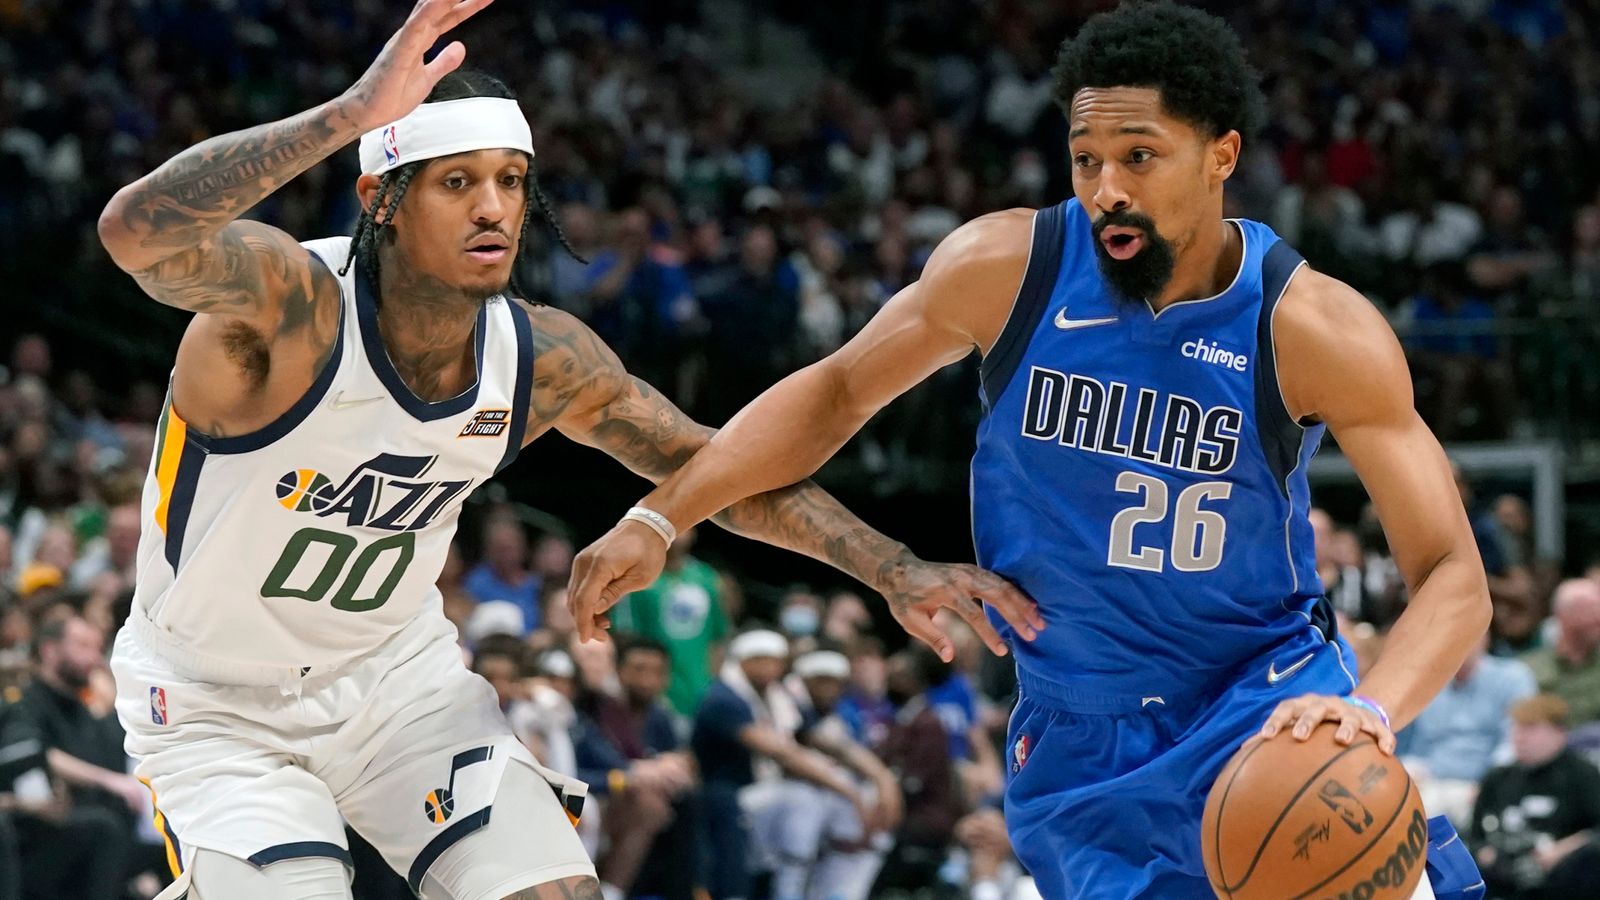 Dallas Mavericks vs Utah Jazz series preview ahead of Game 1 live on